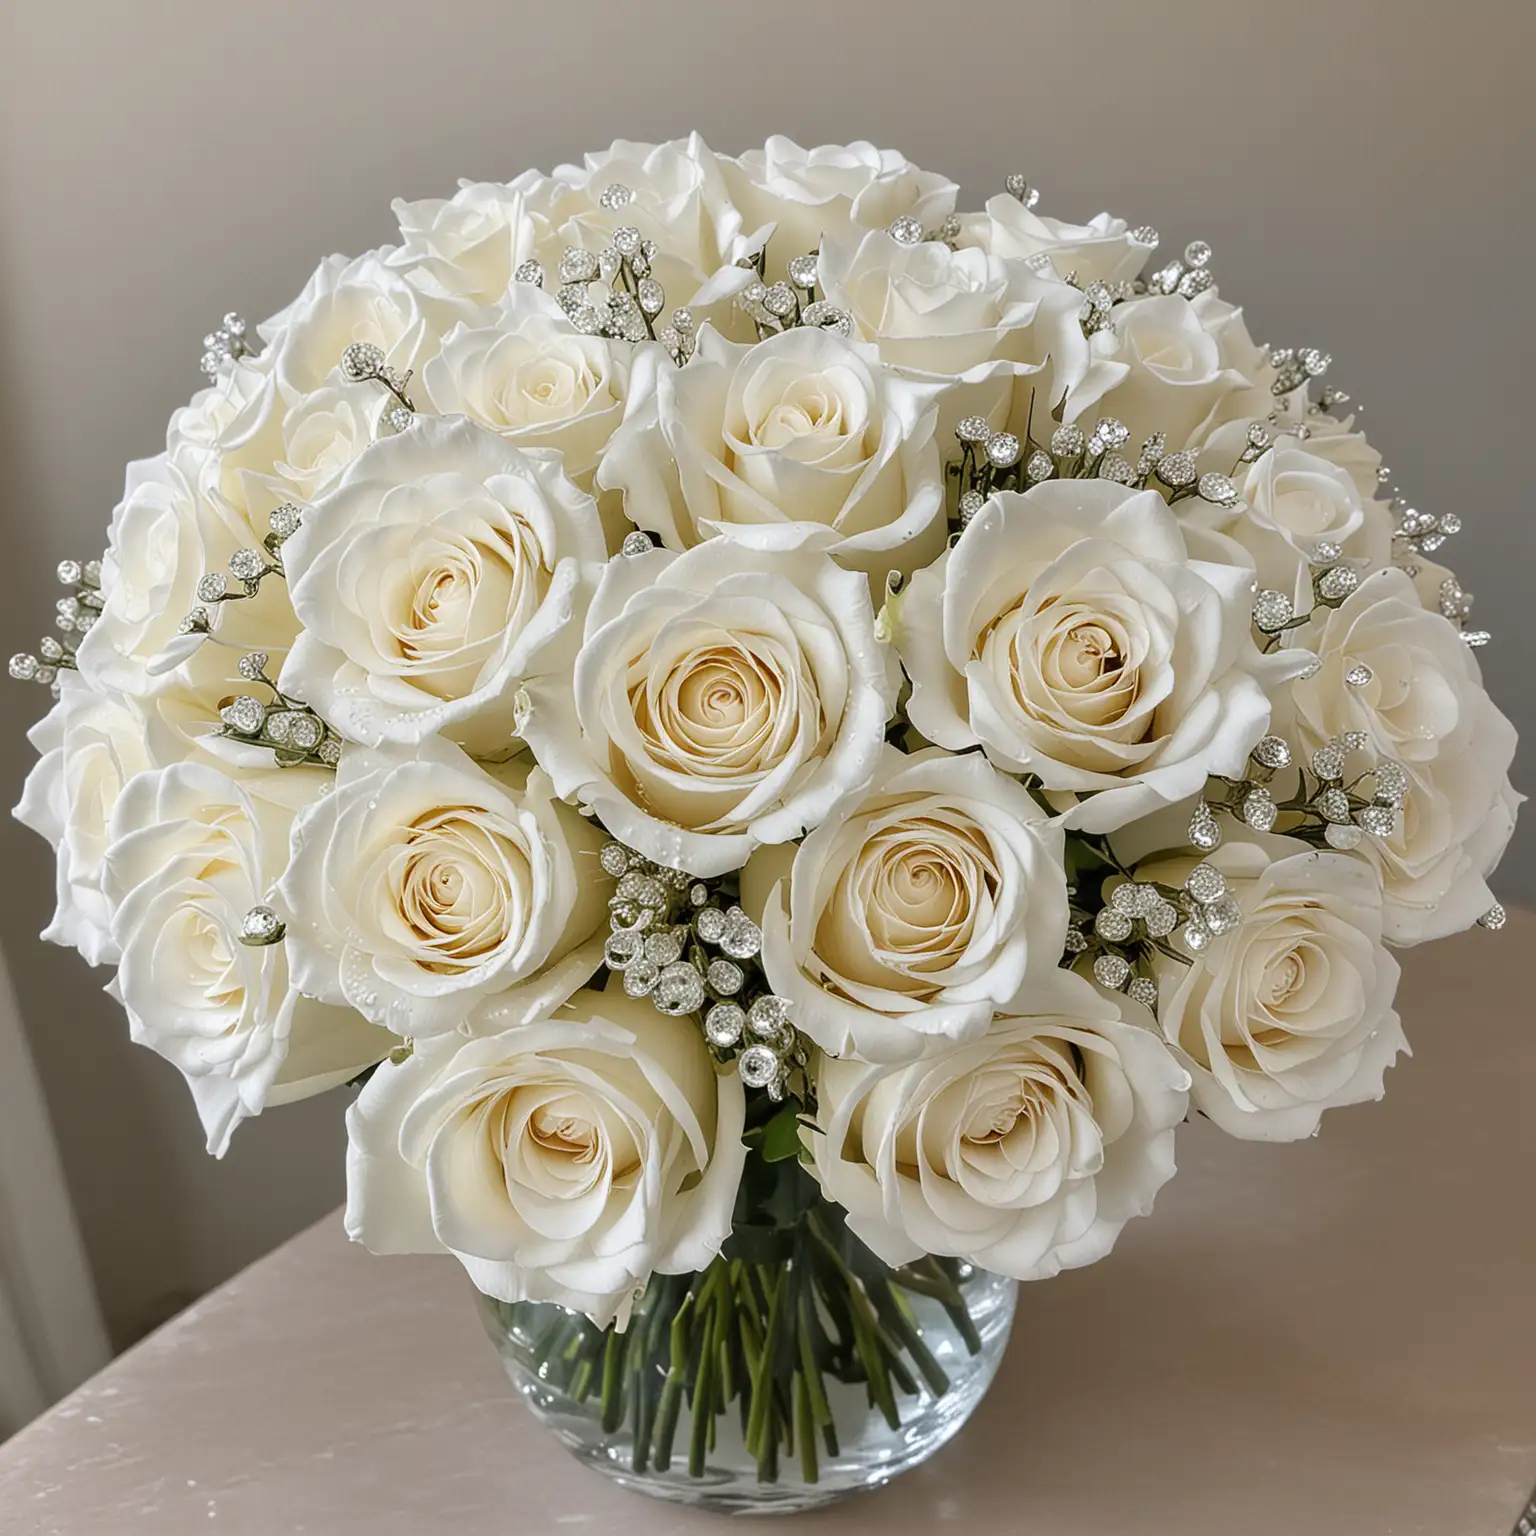 sparkly white roses